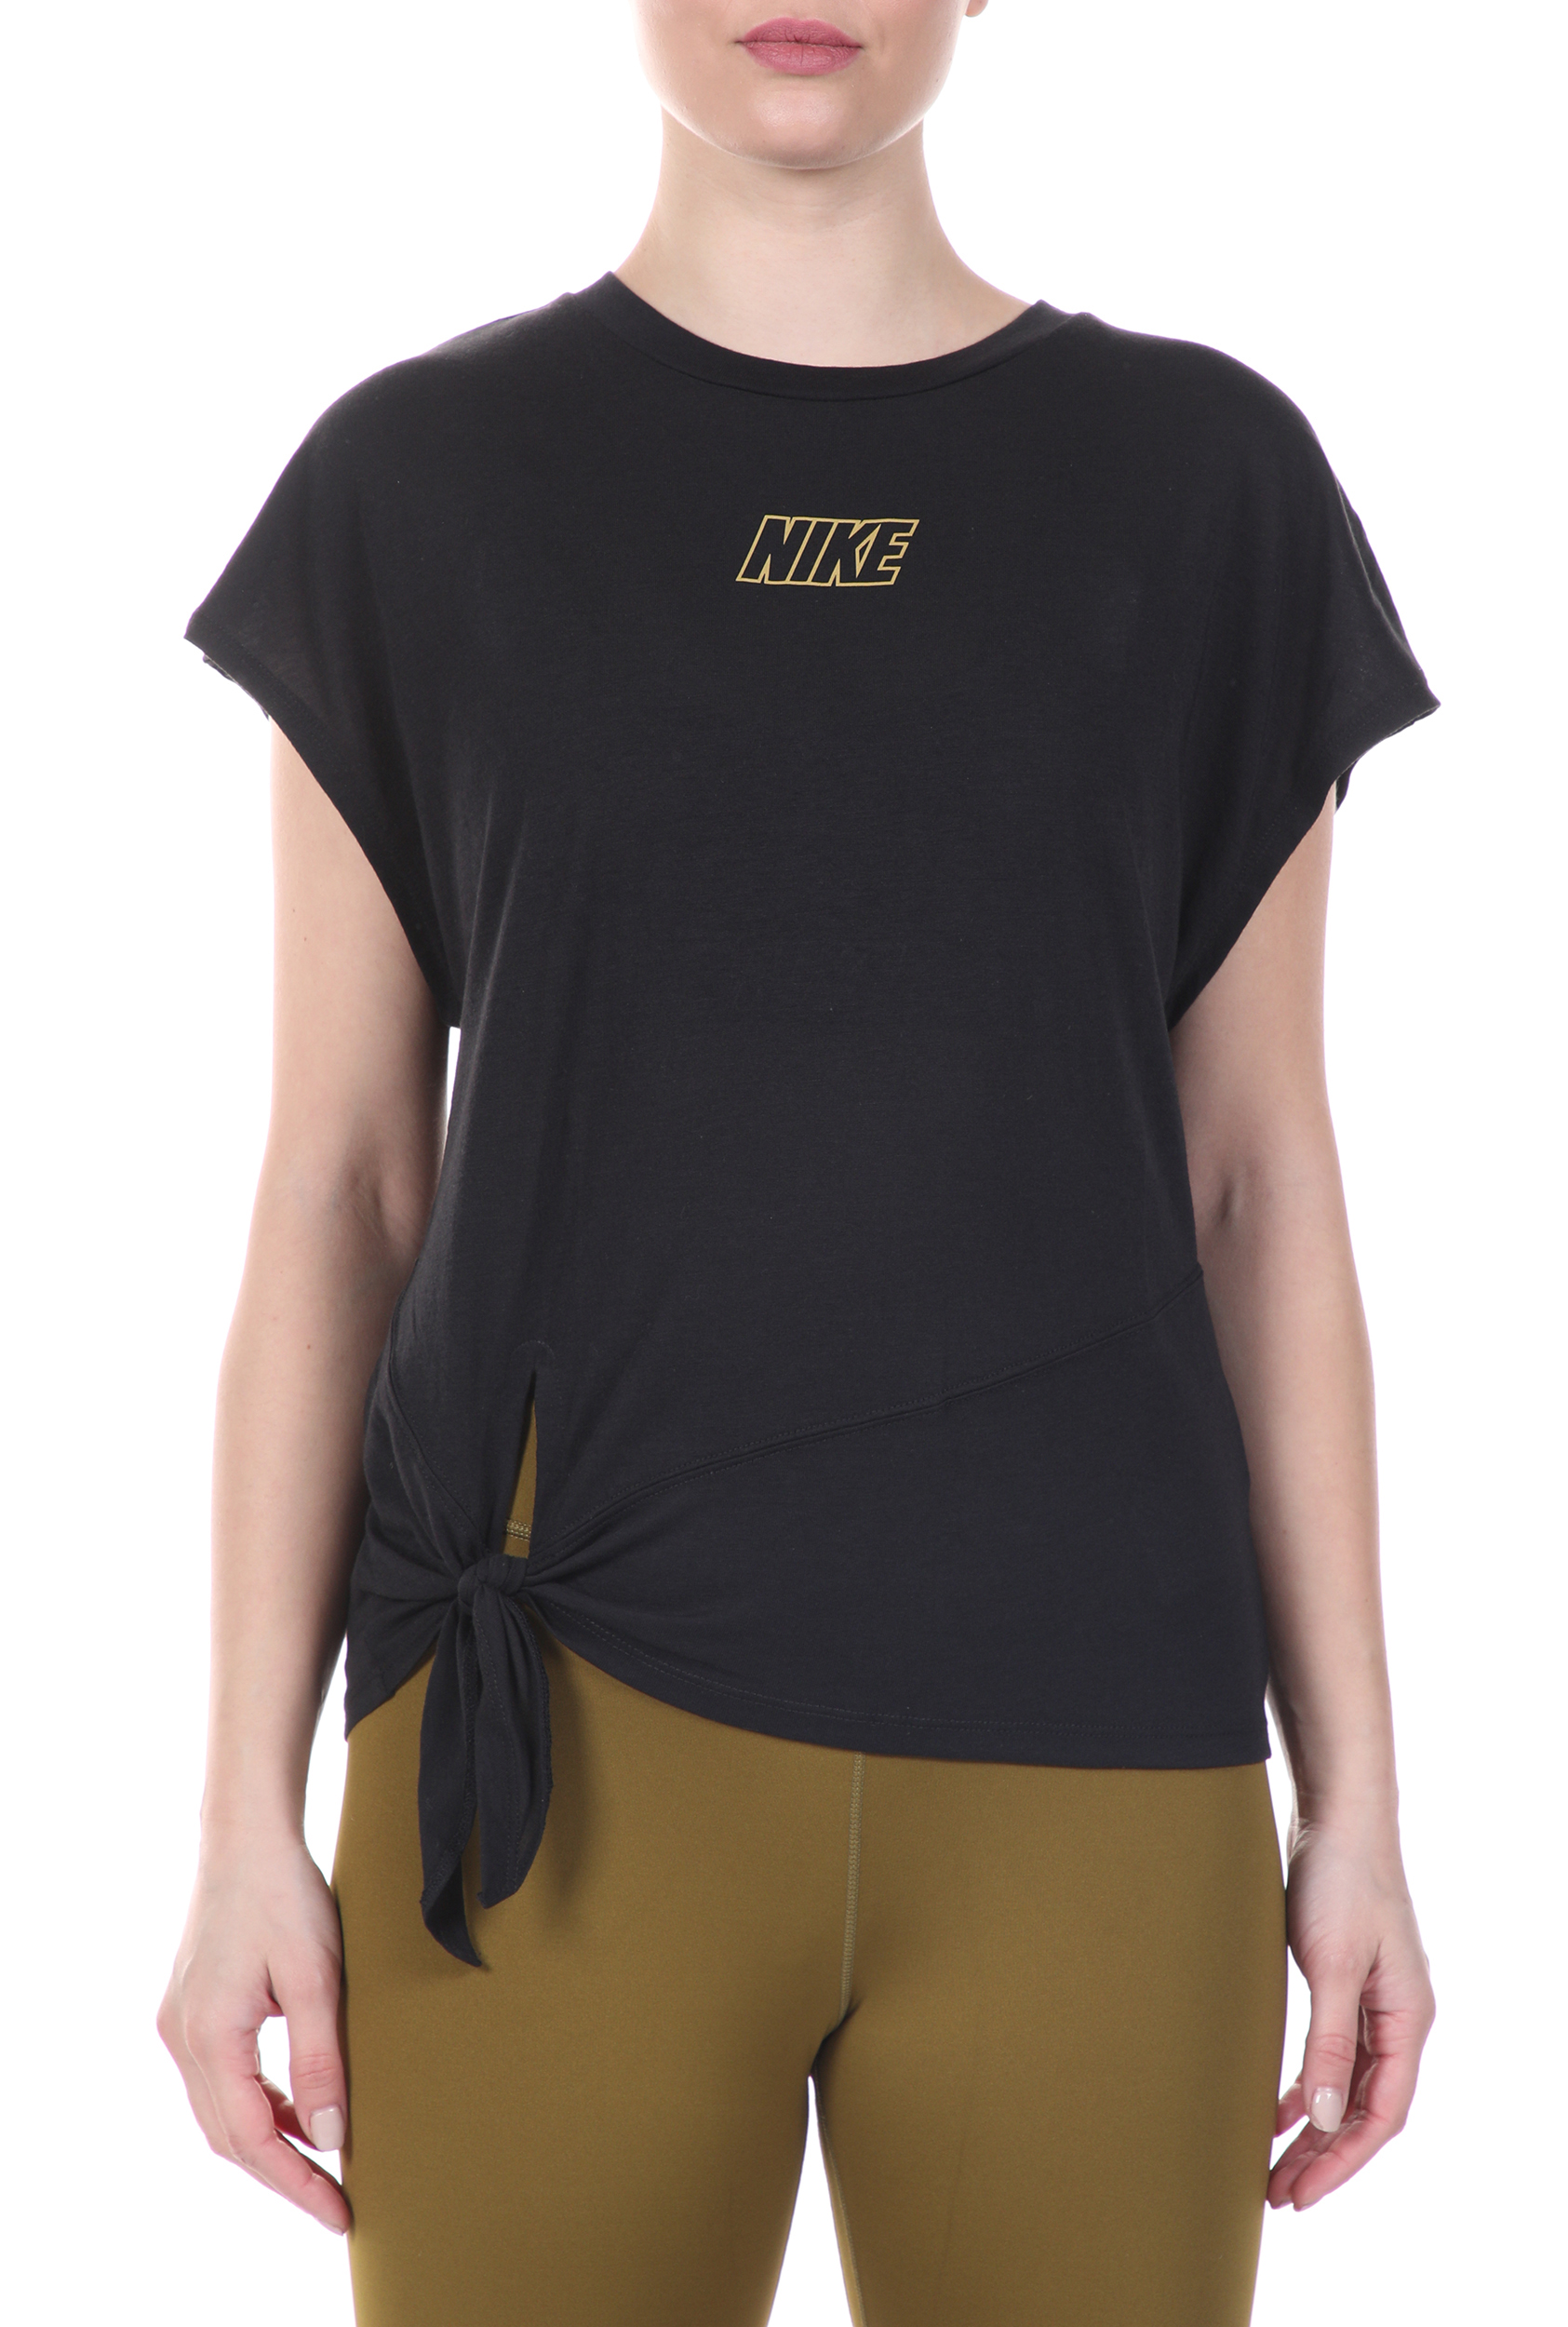 NIKE – Γυναικείο t-shirt NIKE DRY SS TOP TIE PP5 CB μαύρο